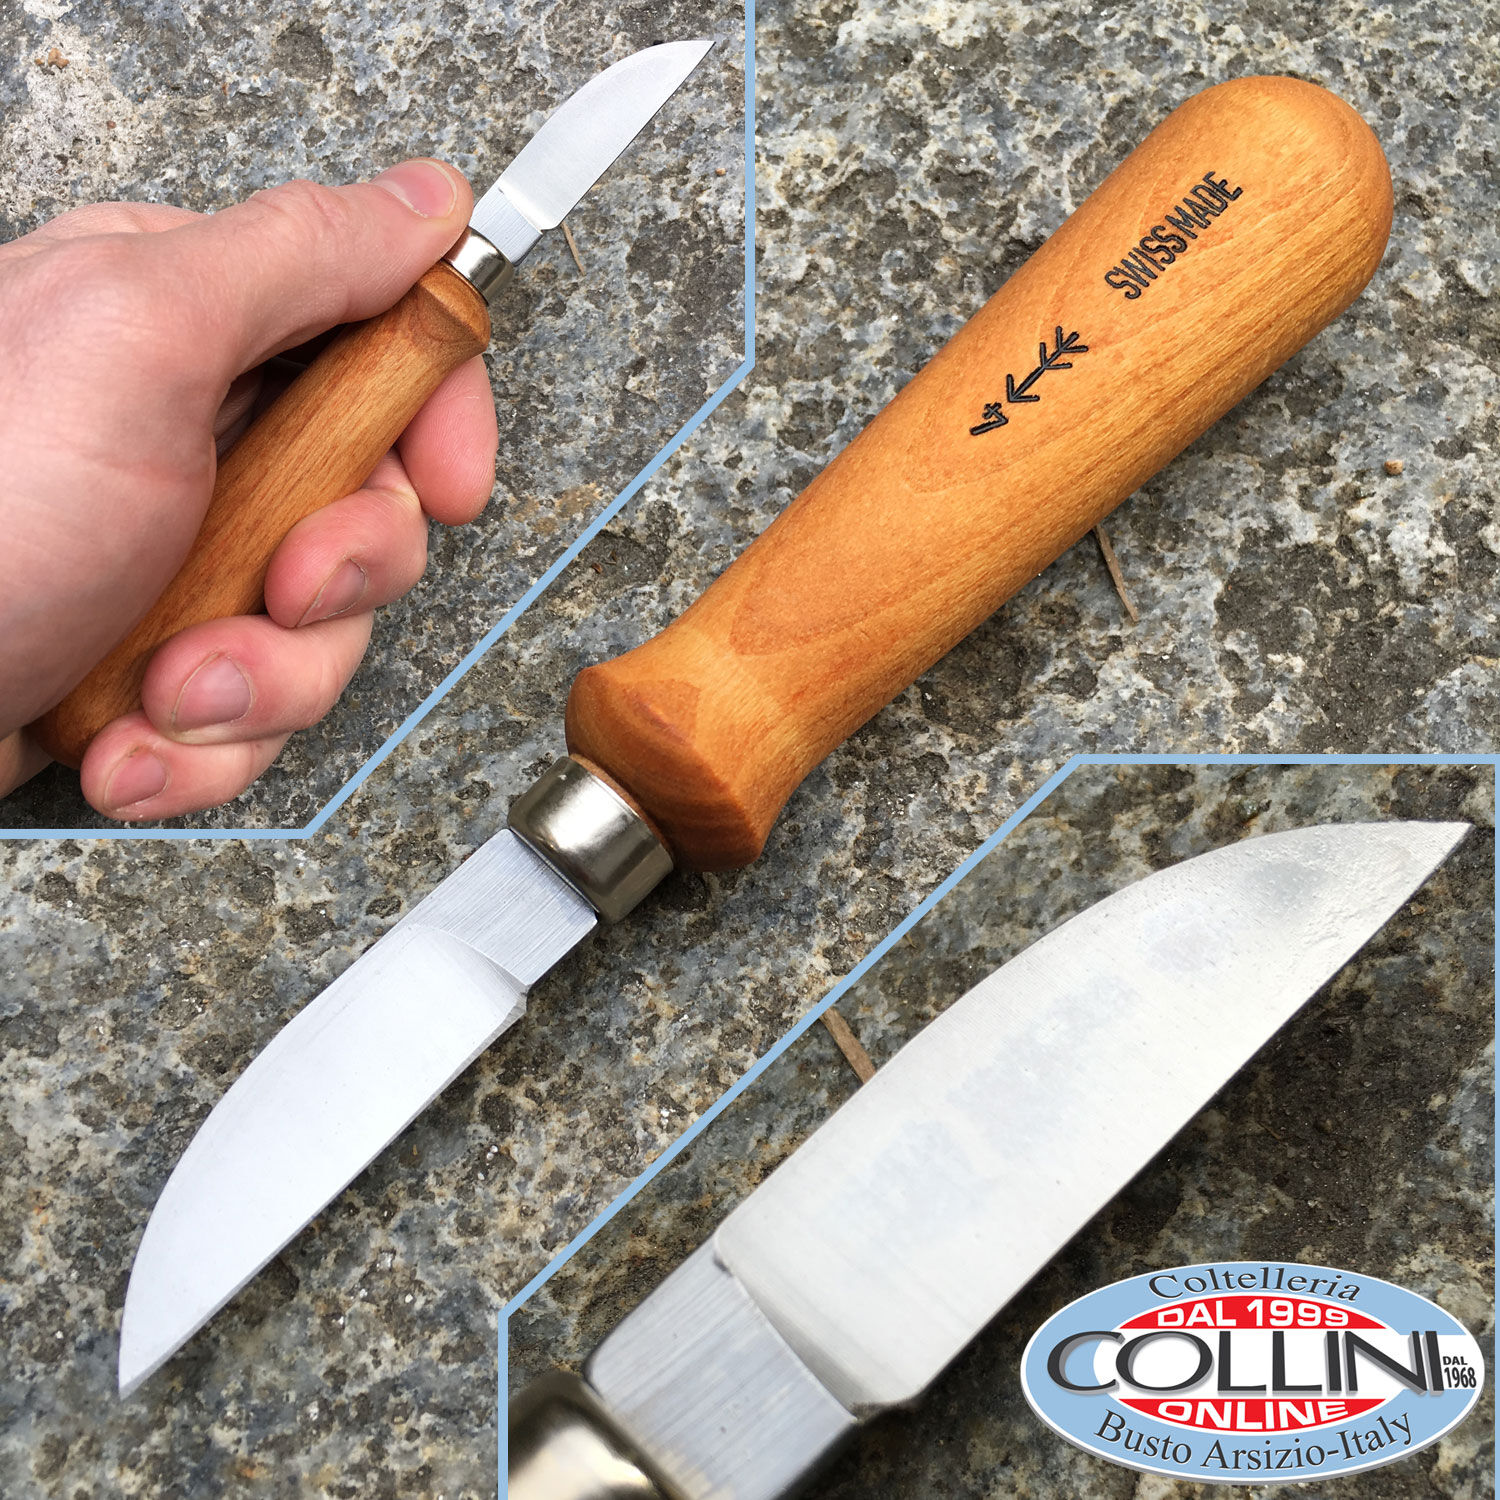 Pfeil - Chip carving knives Kerb 4 Schnitzmesser - carving tools